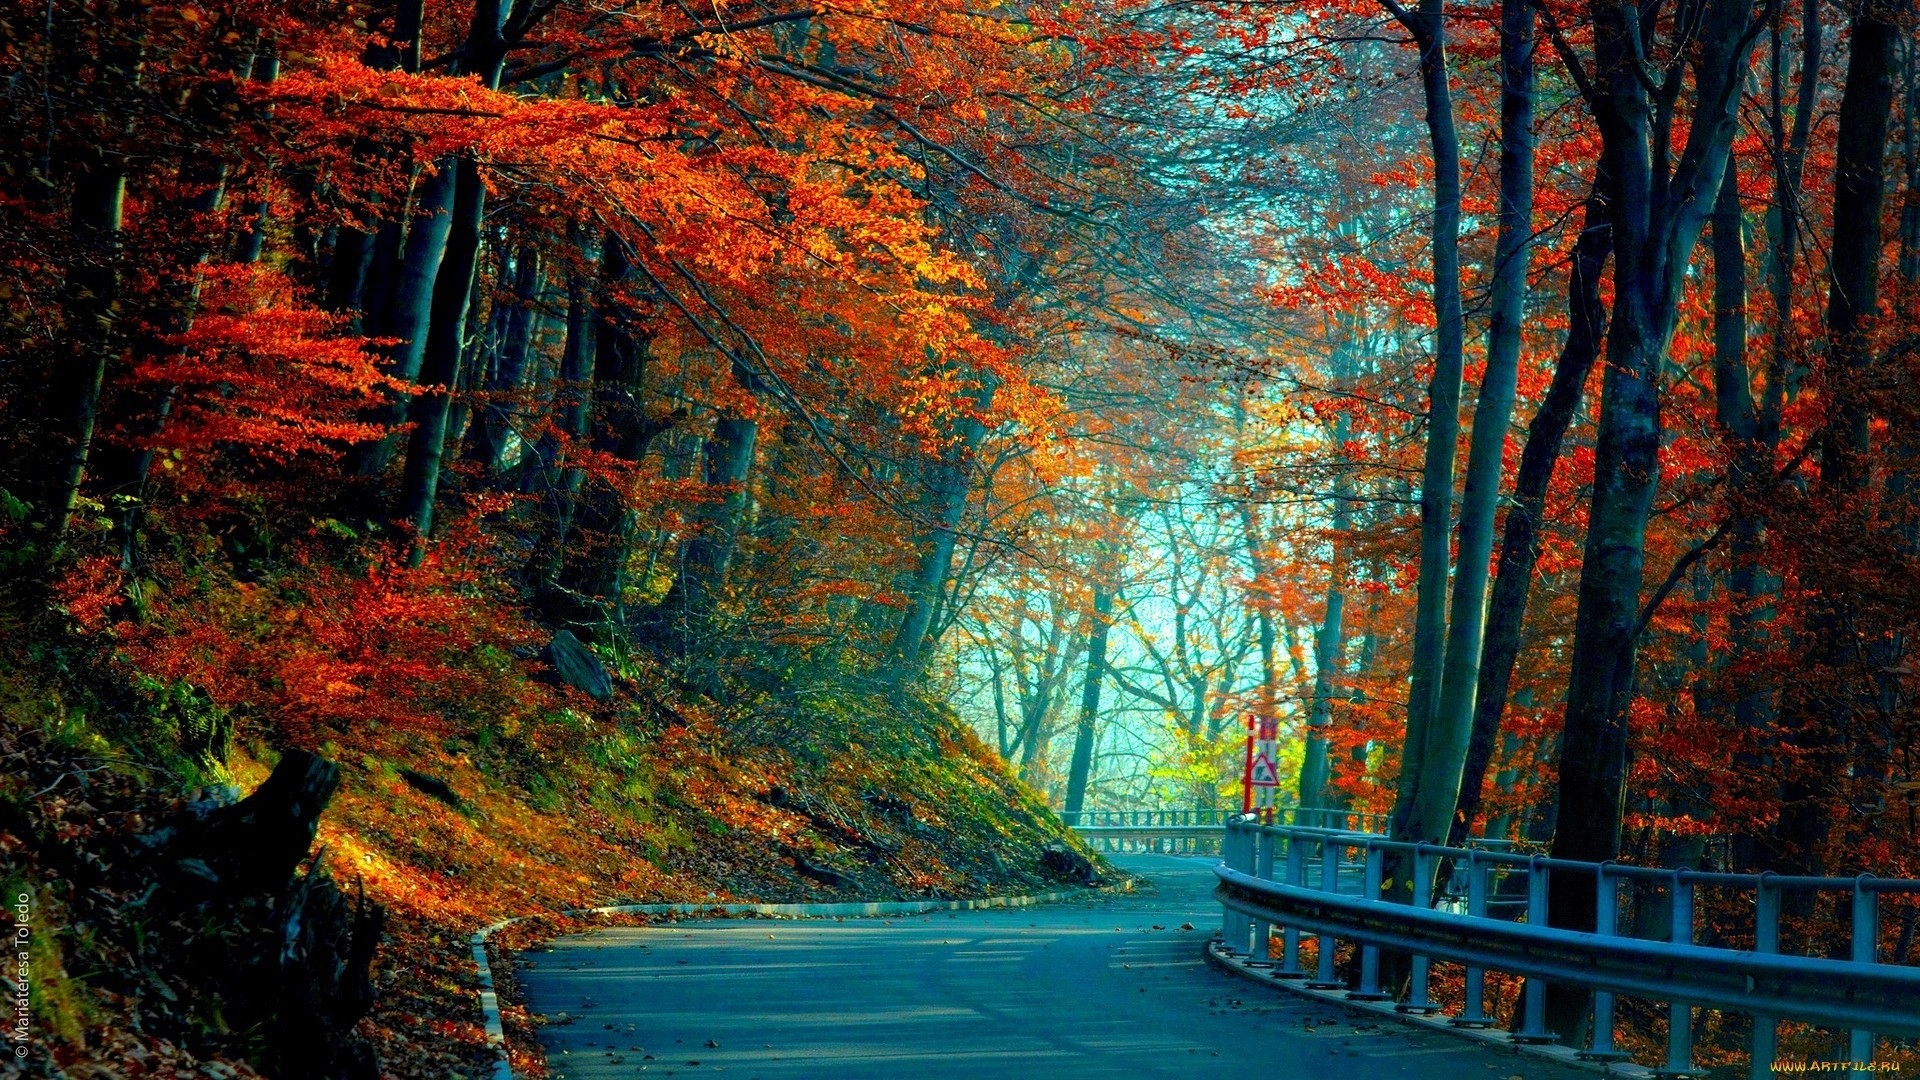 Autumn HD Wallpaper 1080p Image